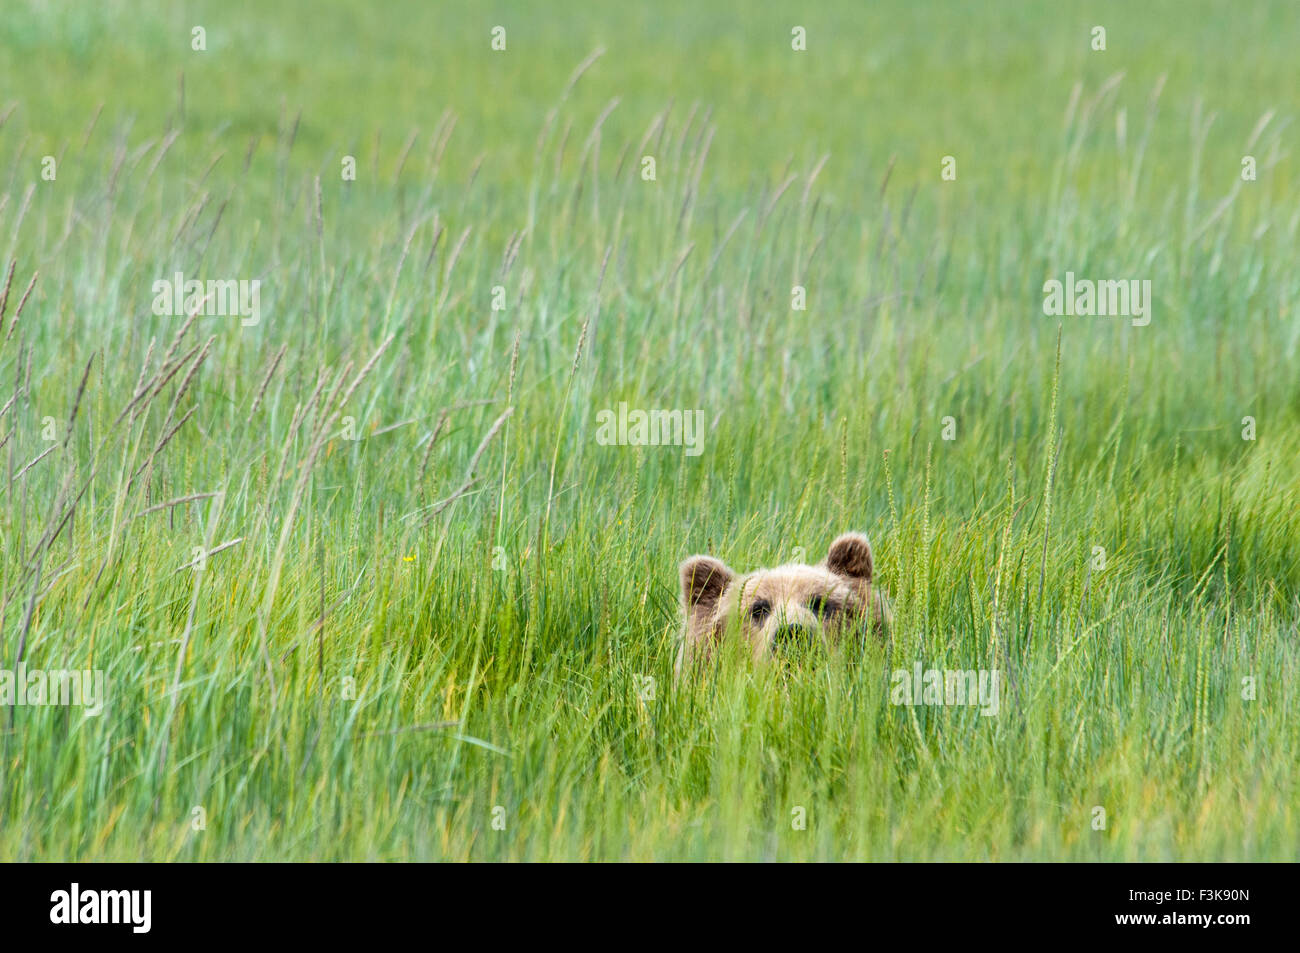 Adult Grizzly Bear, Ursus arctos, peeking up from green sedge grass, Lake Clark National Park, Alaska, USA Stock Photo